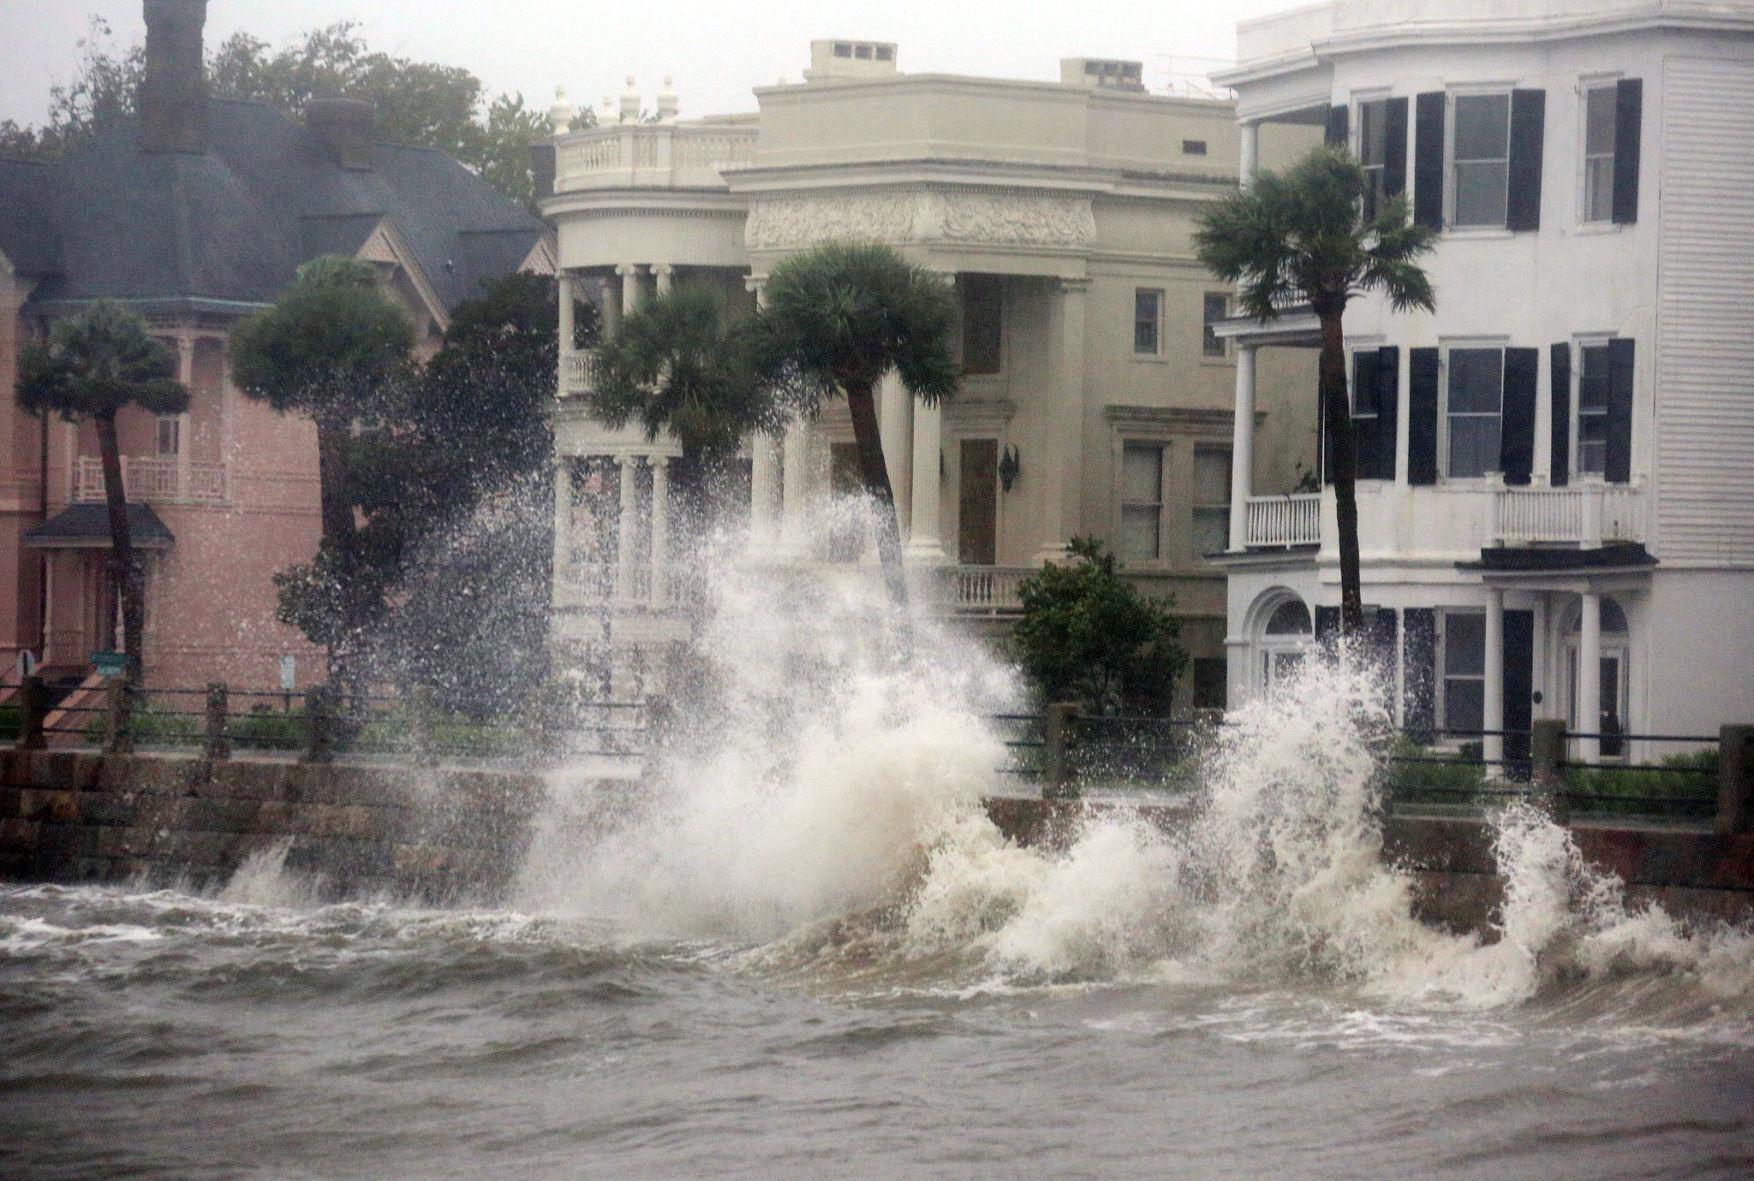 Area sees 'incredible' flooding as Irma pounds Charleston, coastal